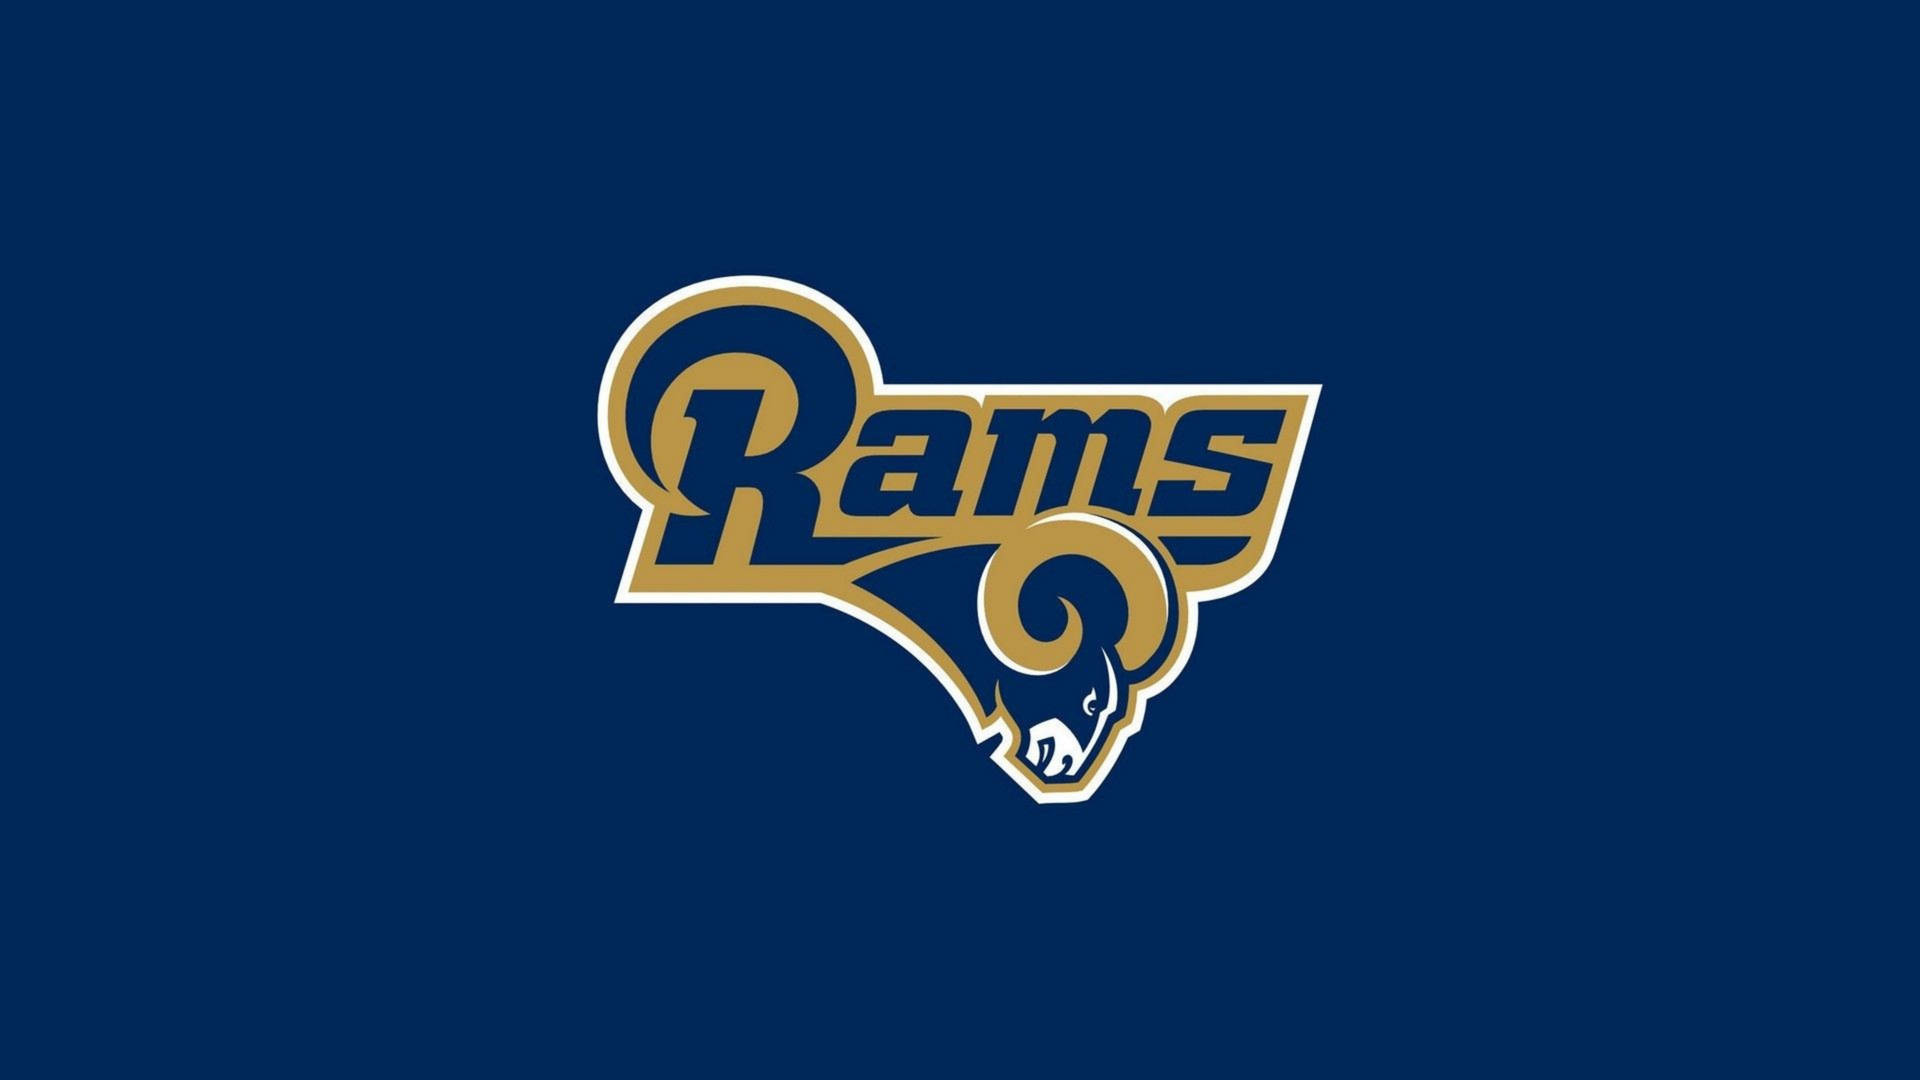 American Football Team Los Angeles Rams Background